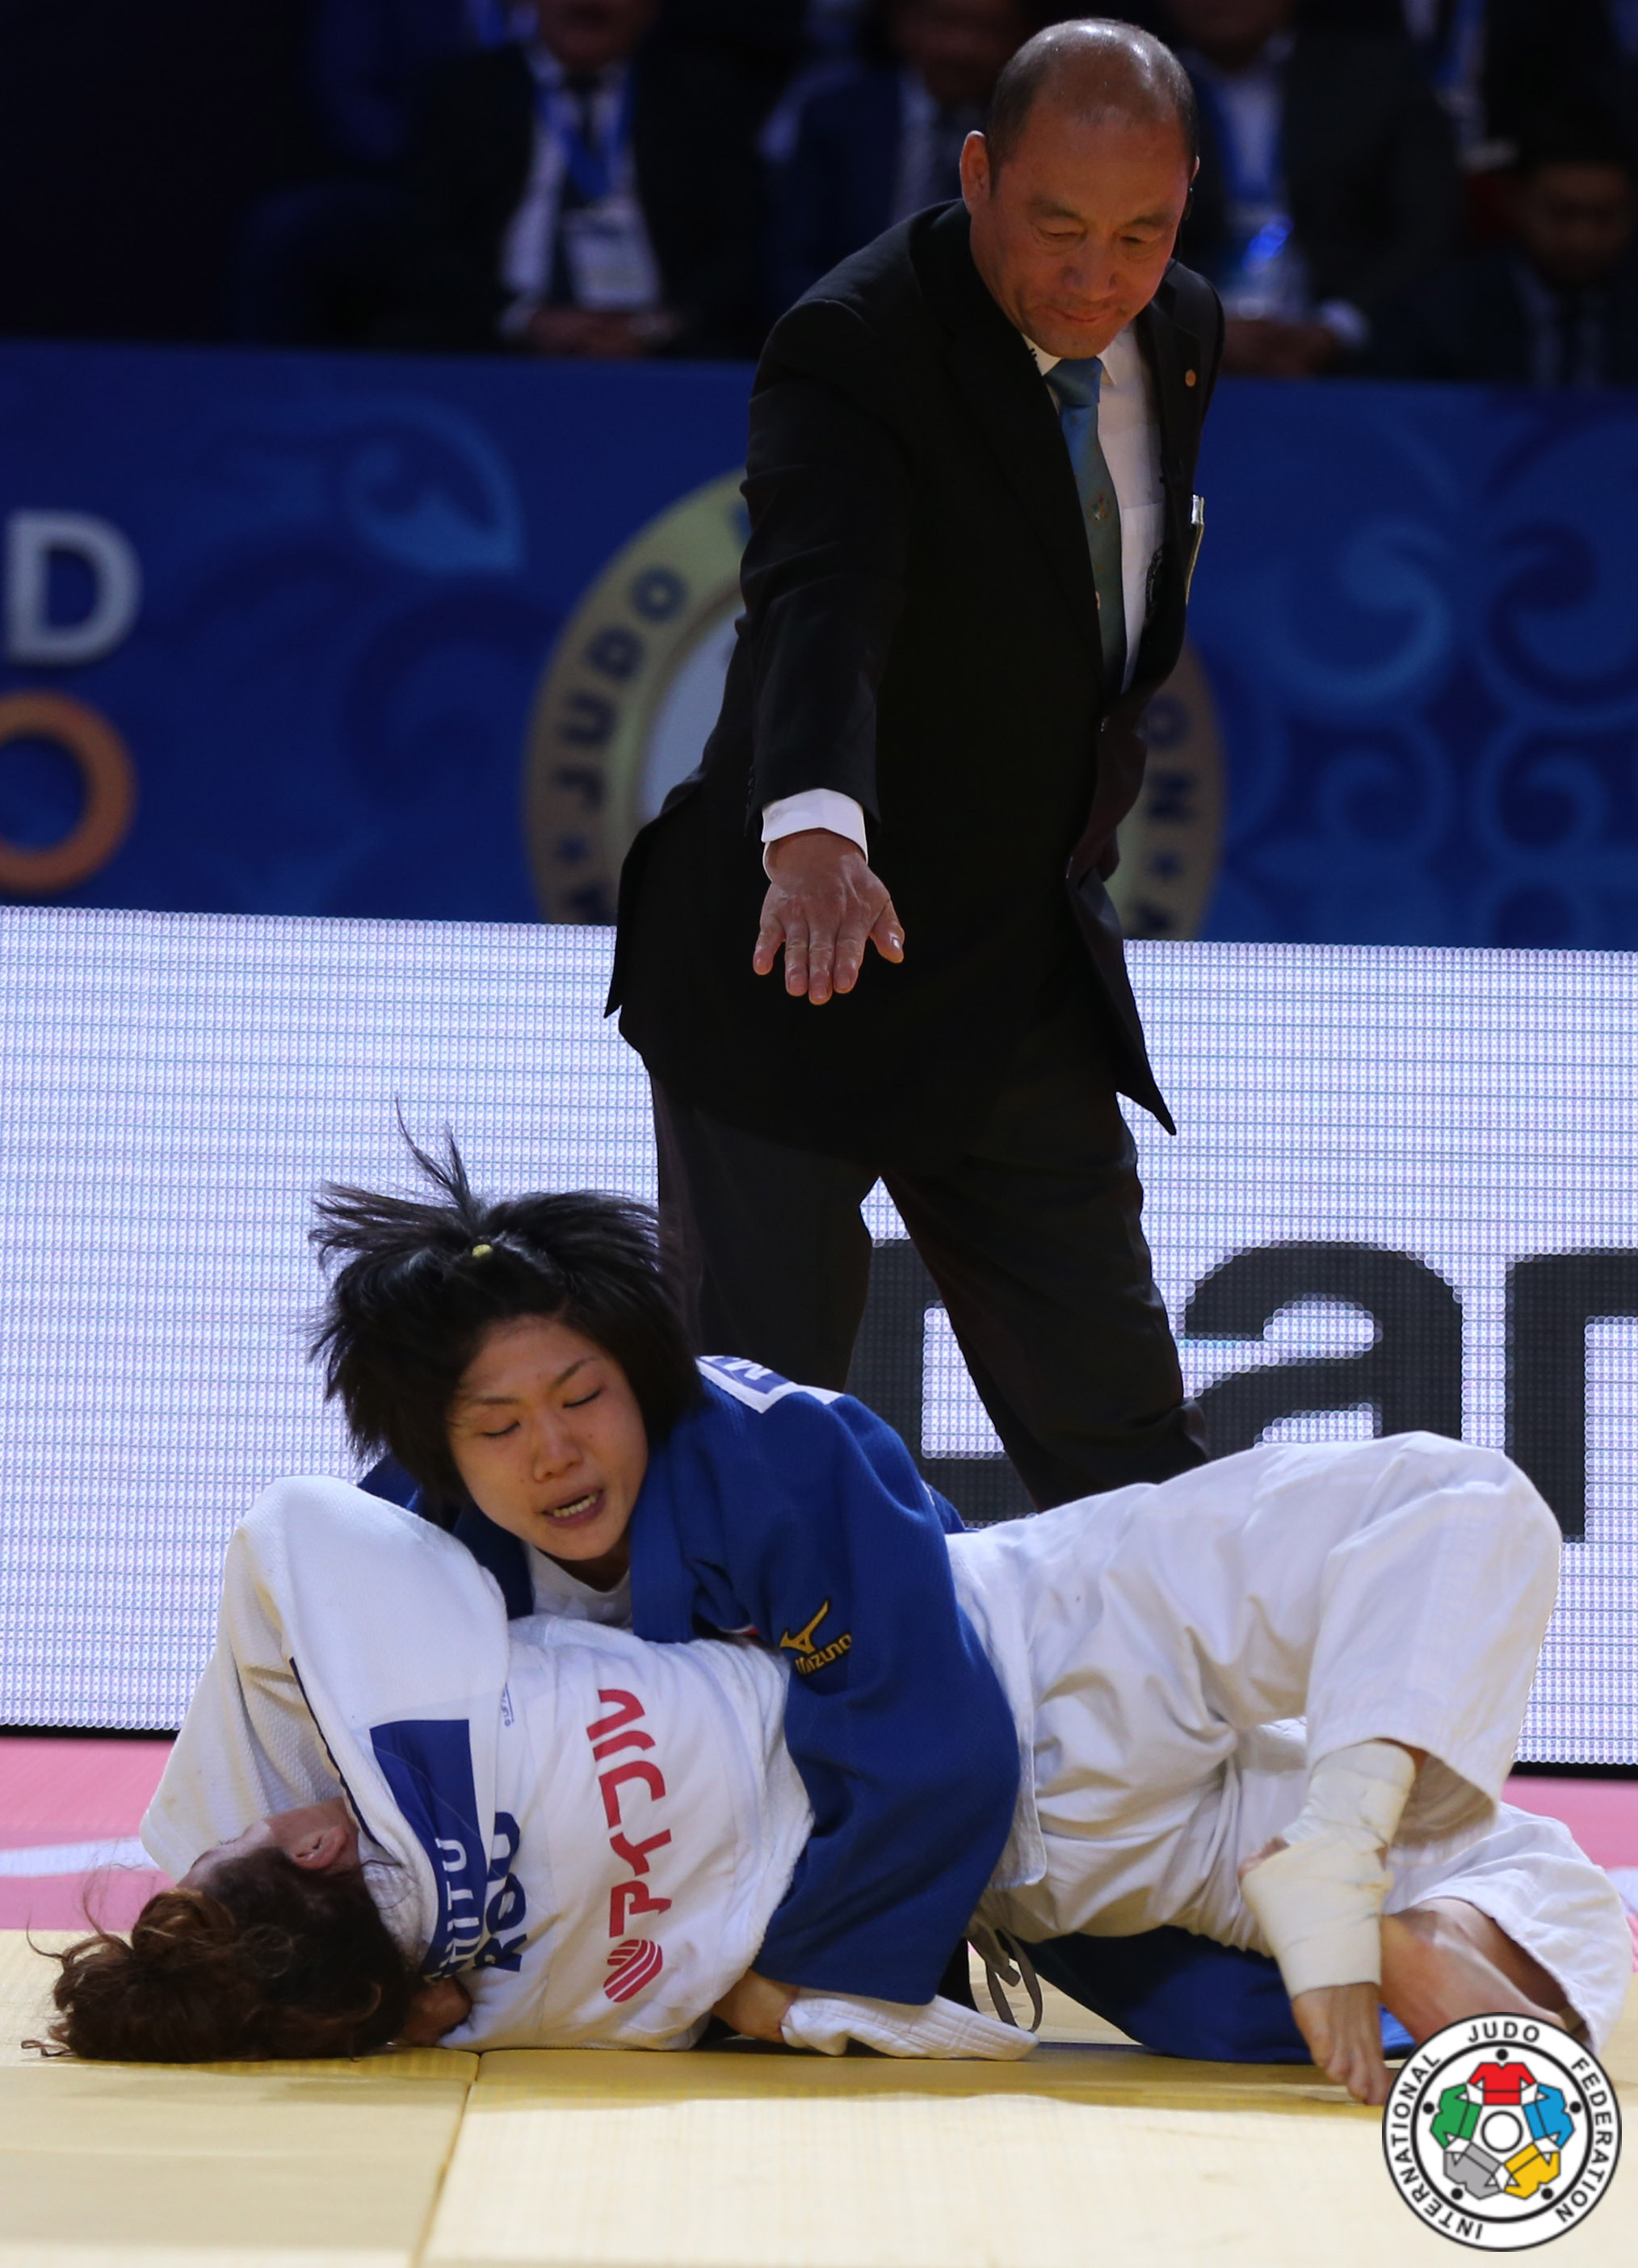 Misato Nakamura